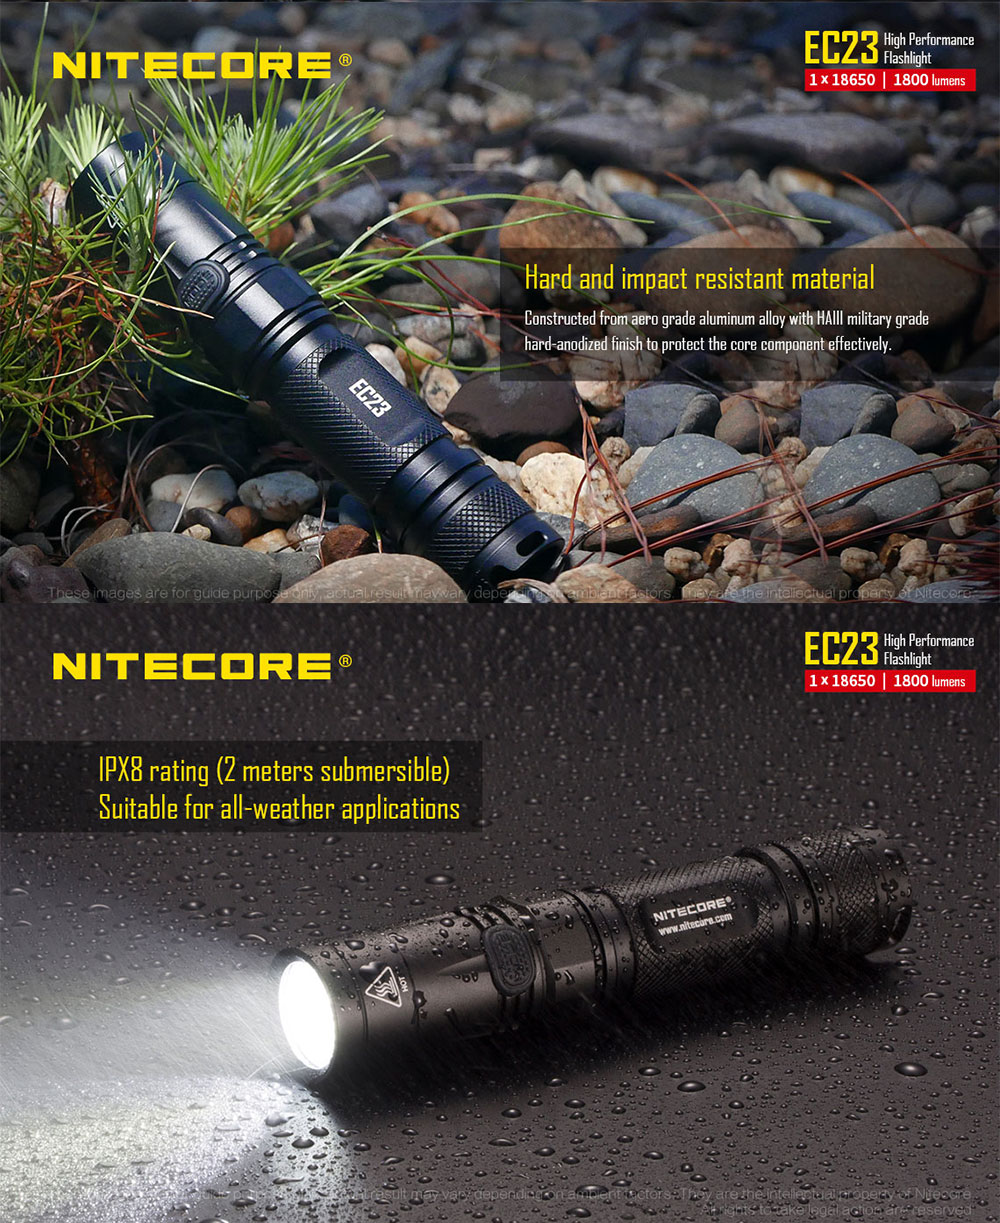 new nitecore flashlight